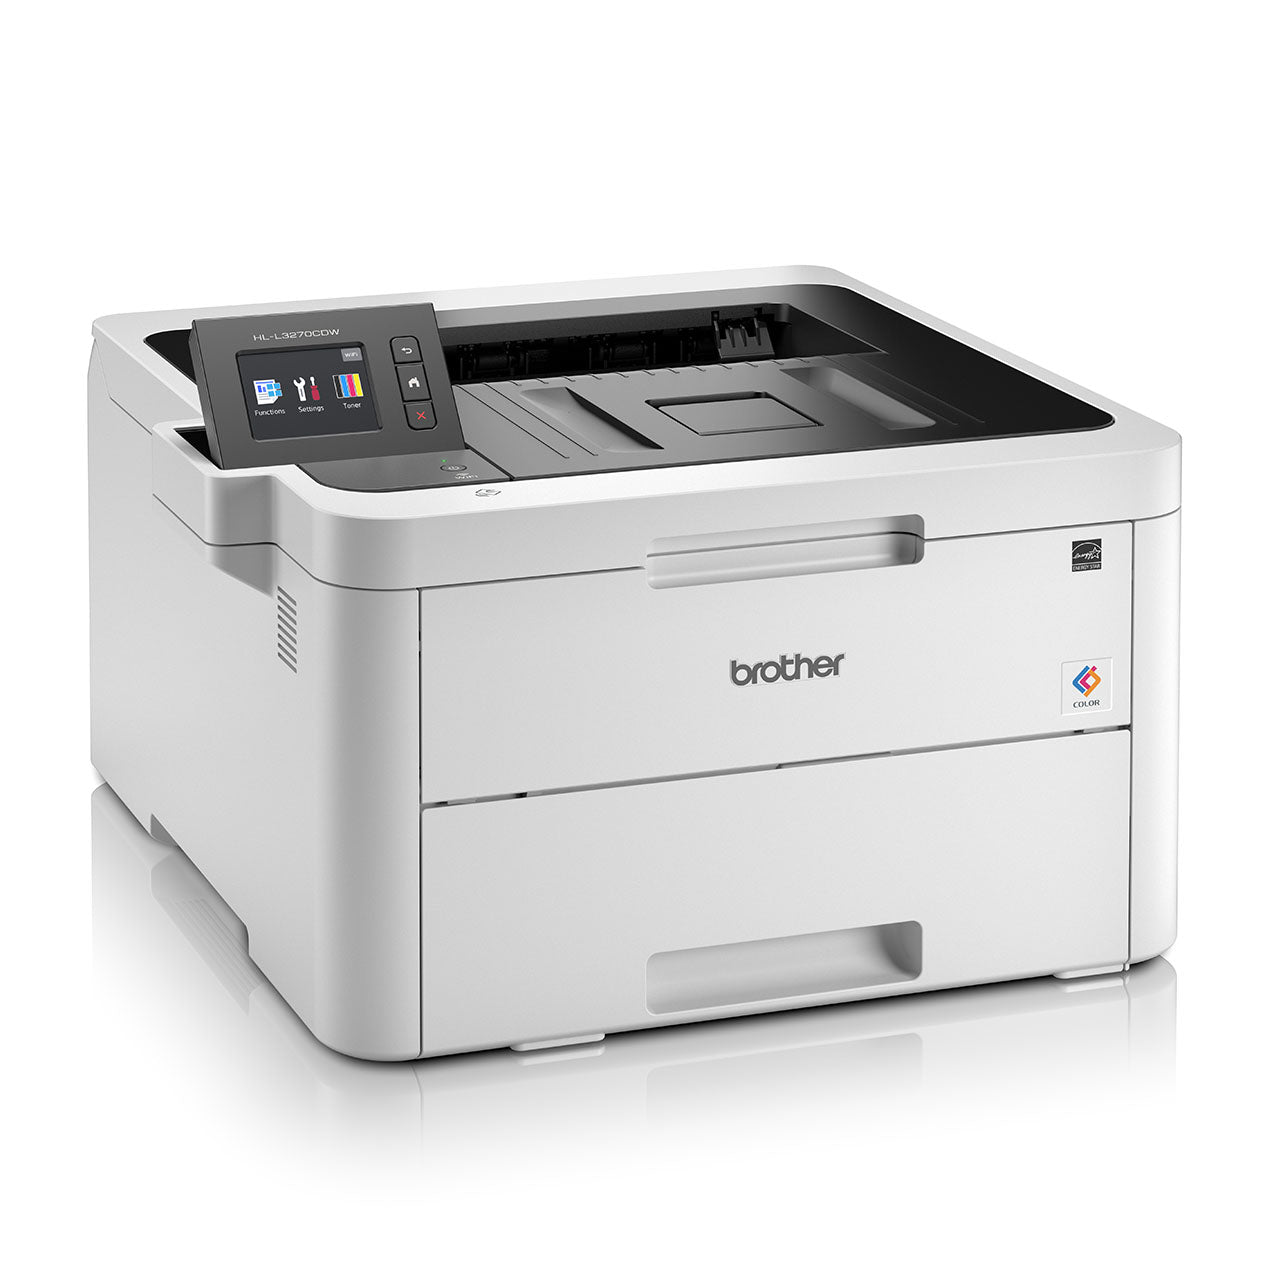 Brother Color Laser Printer | Digital Printer | Office Supplies | Halabh.com